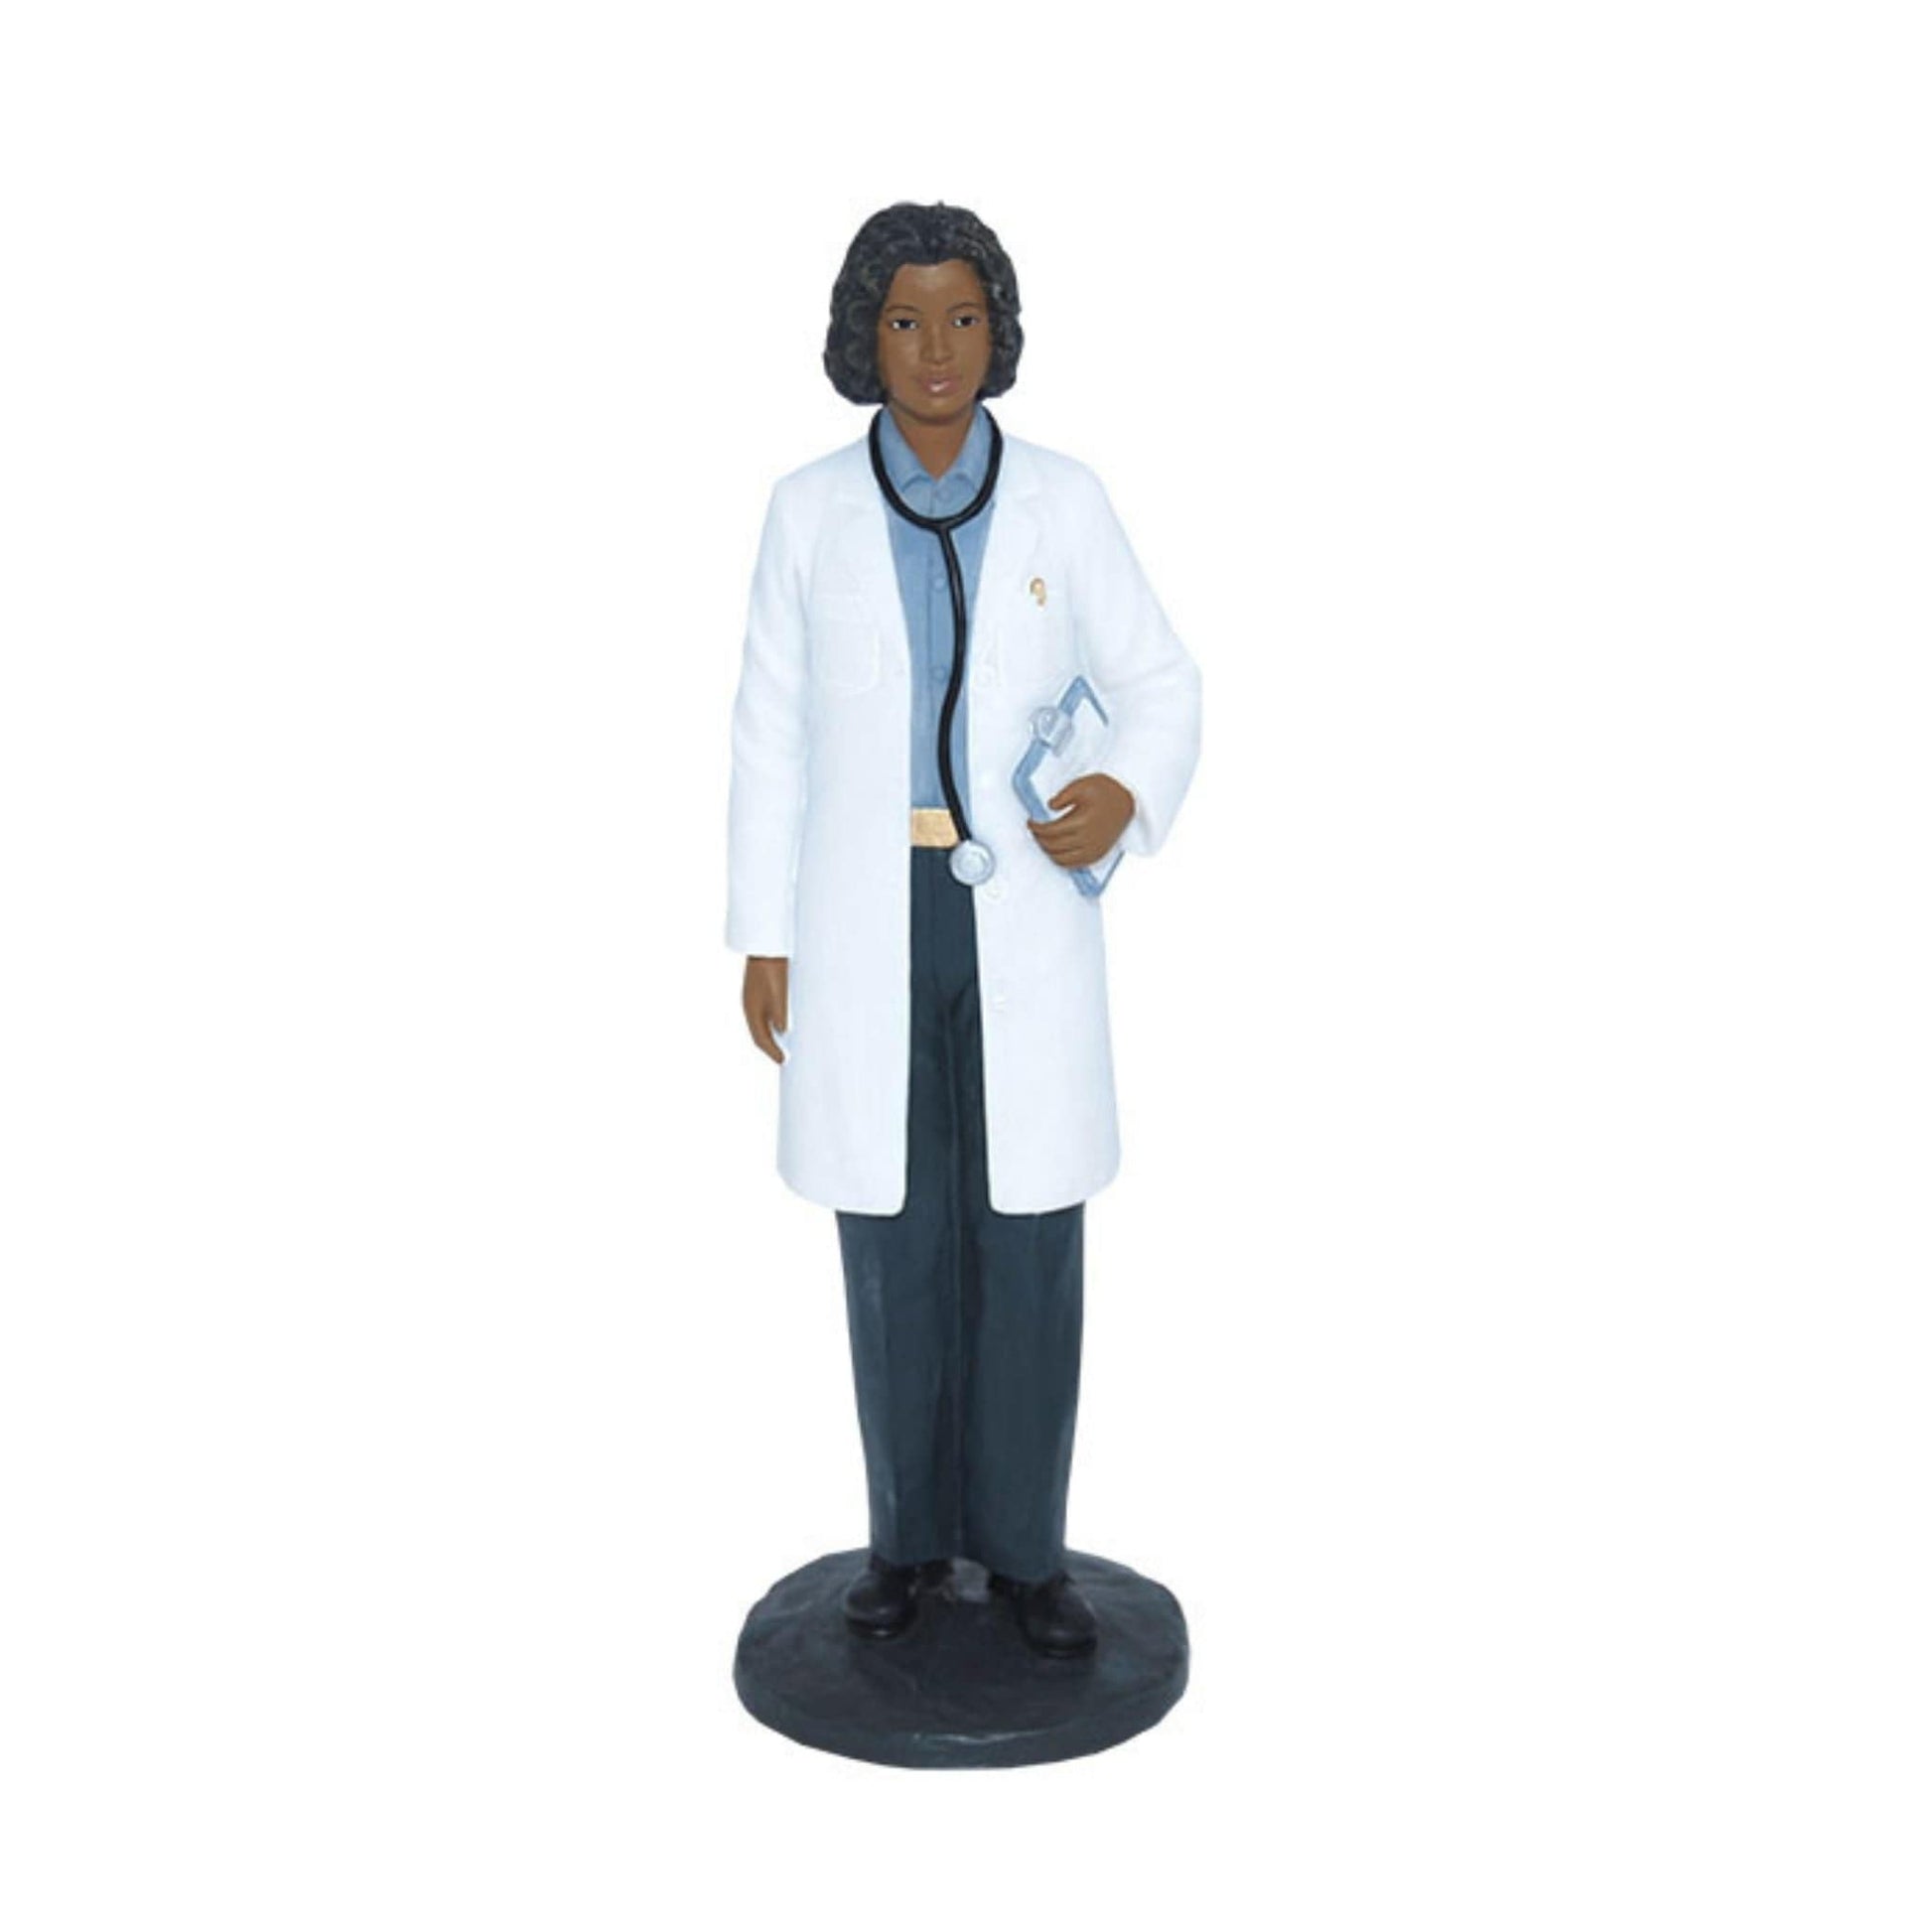 Positive Image Desk Decor Doctor Figurine - Black Female